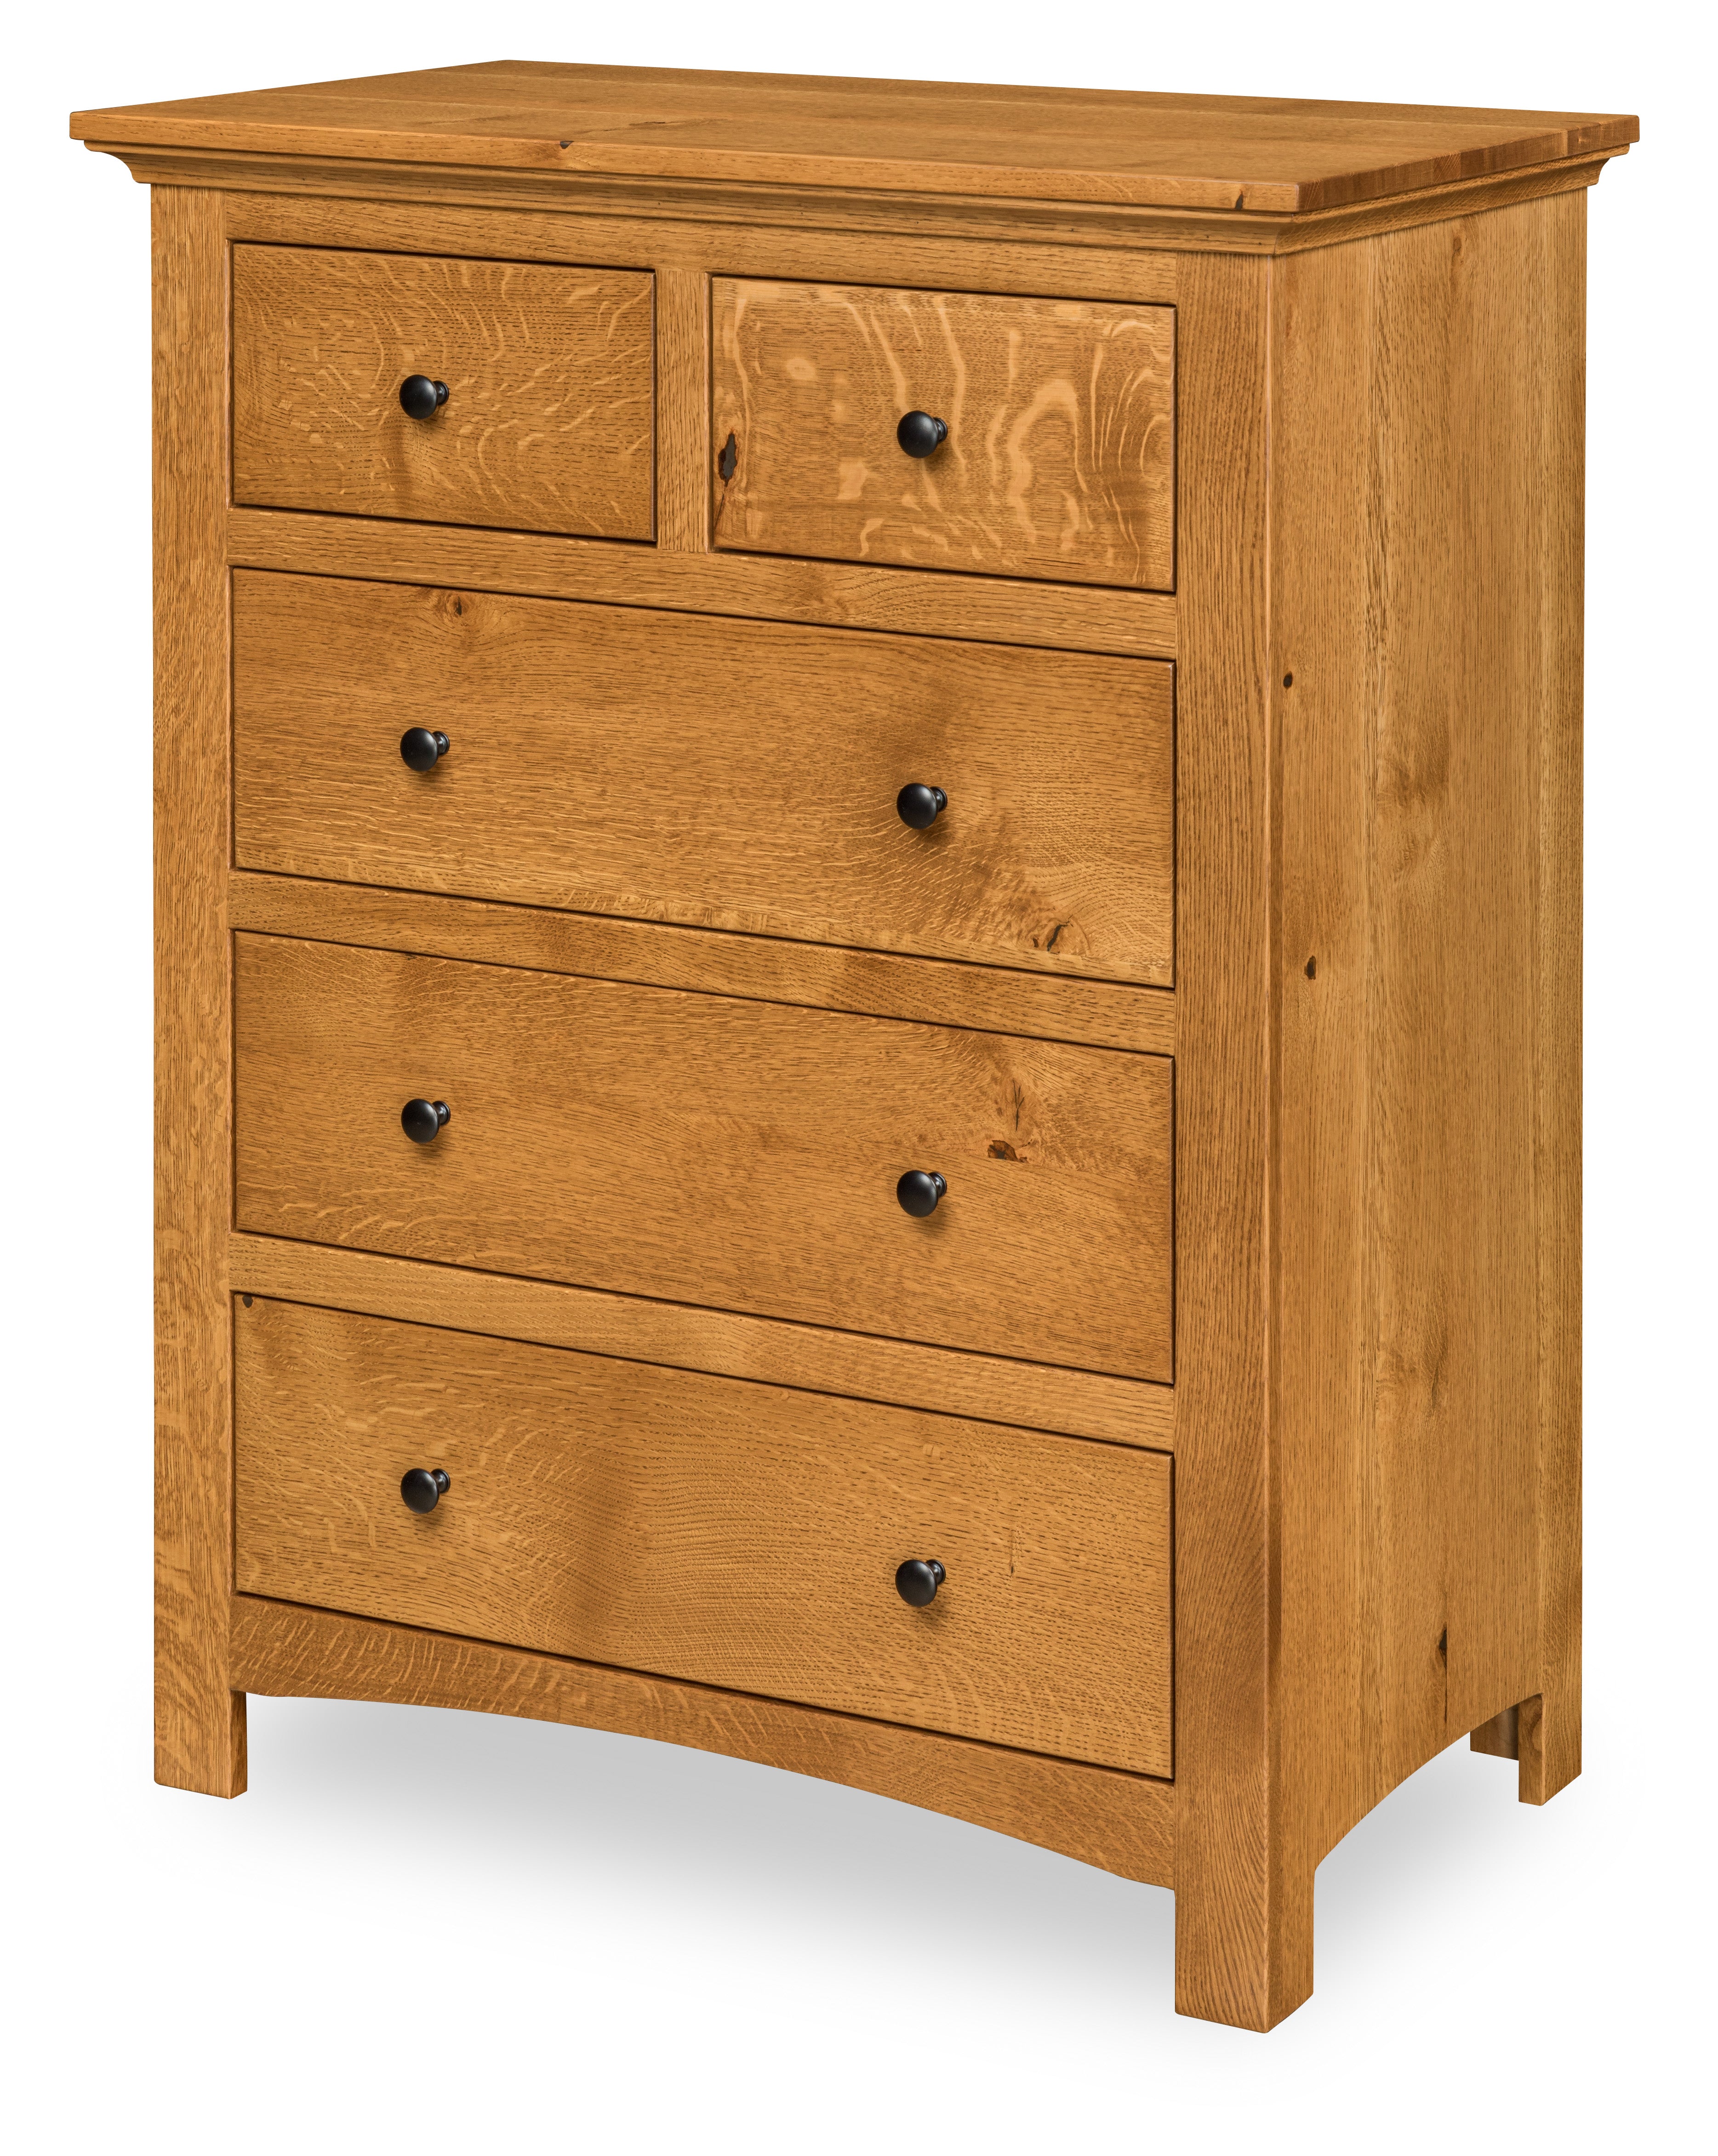 camden chest in rustic quartersawn wood with medium walnut stain